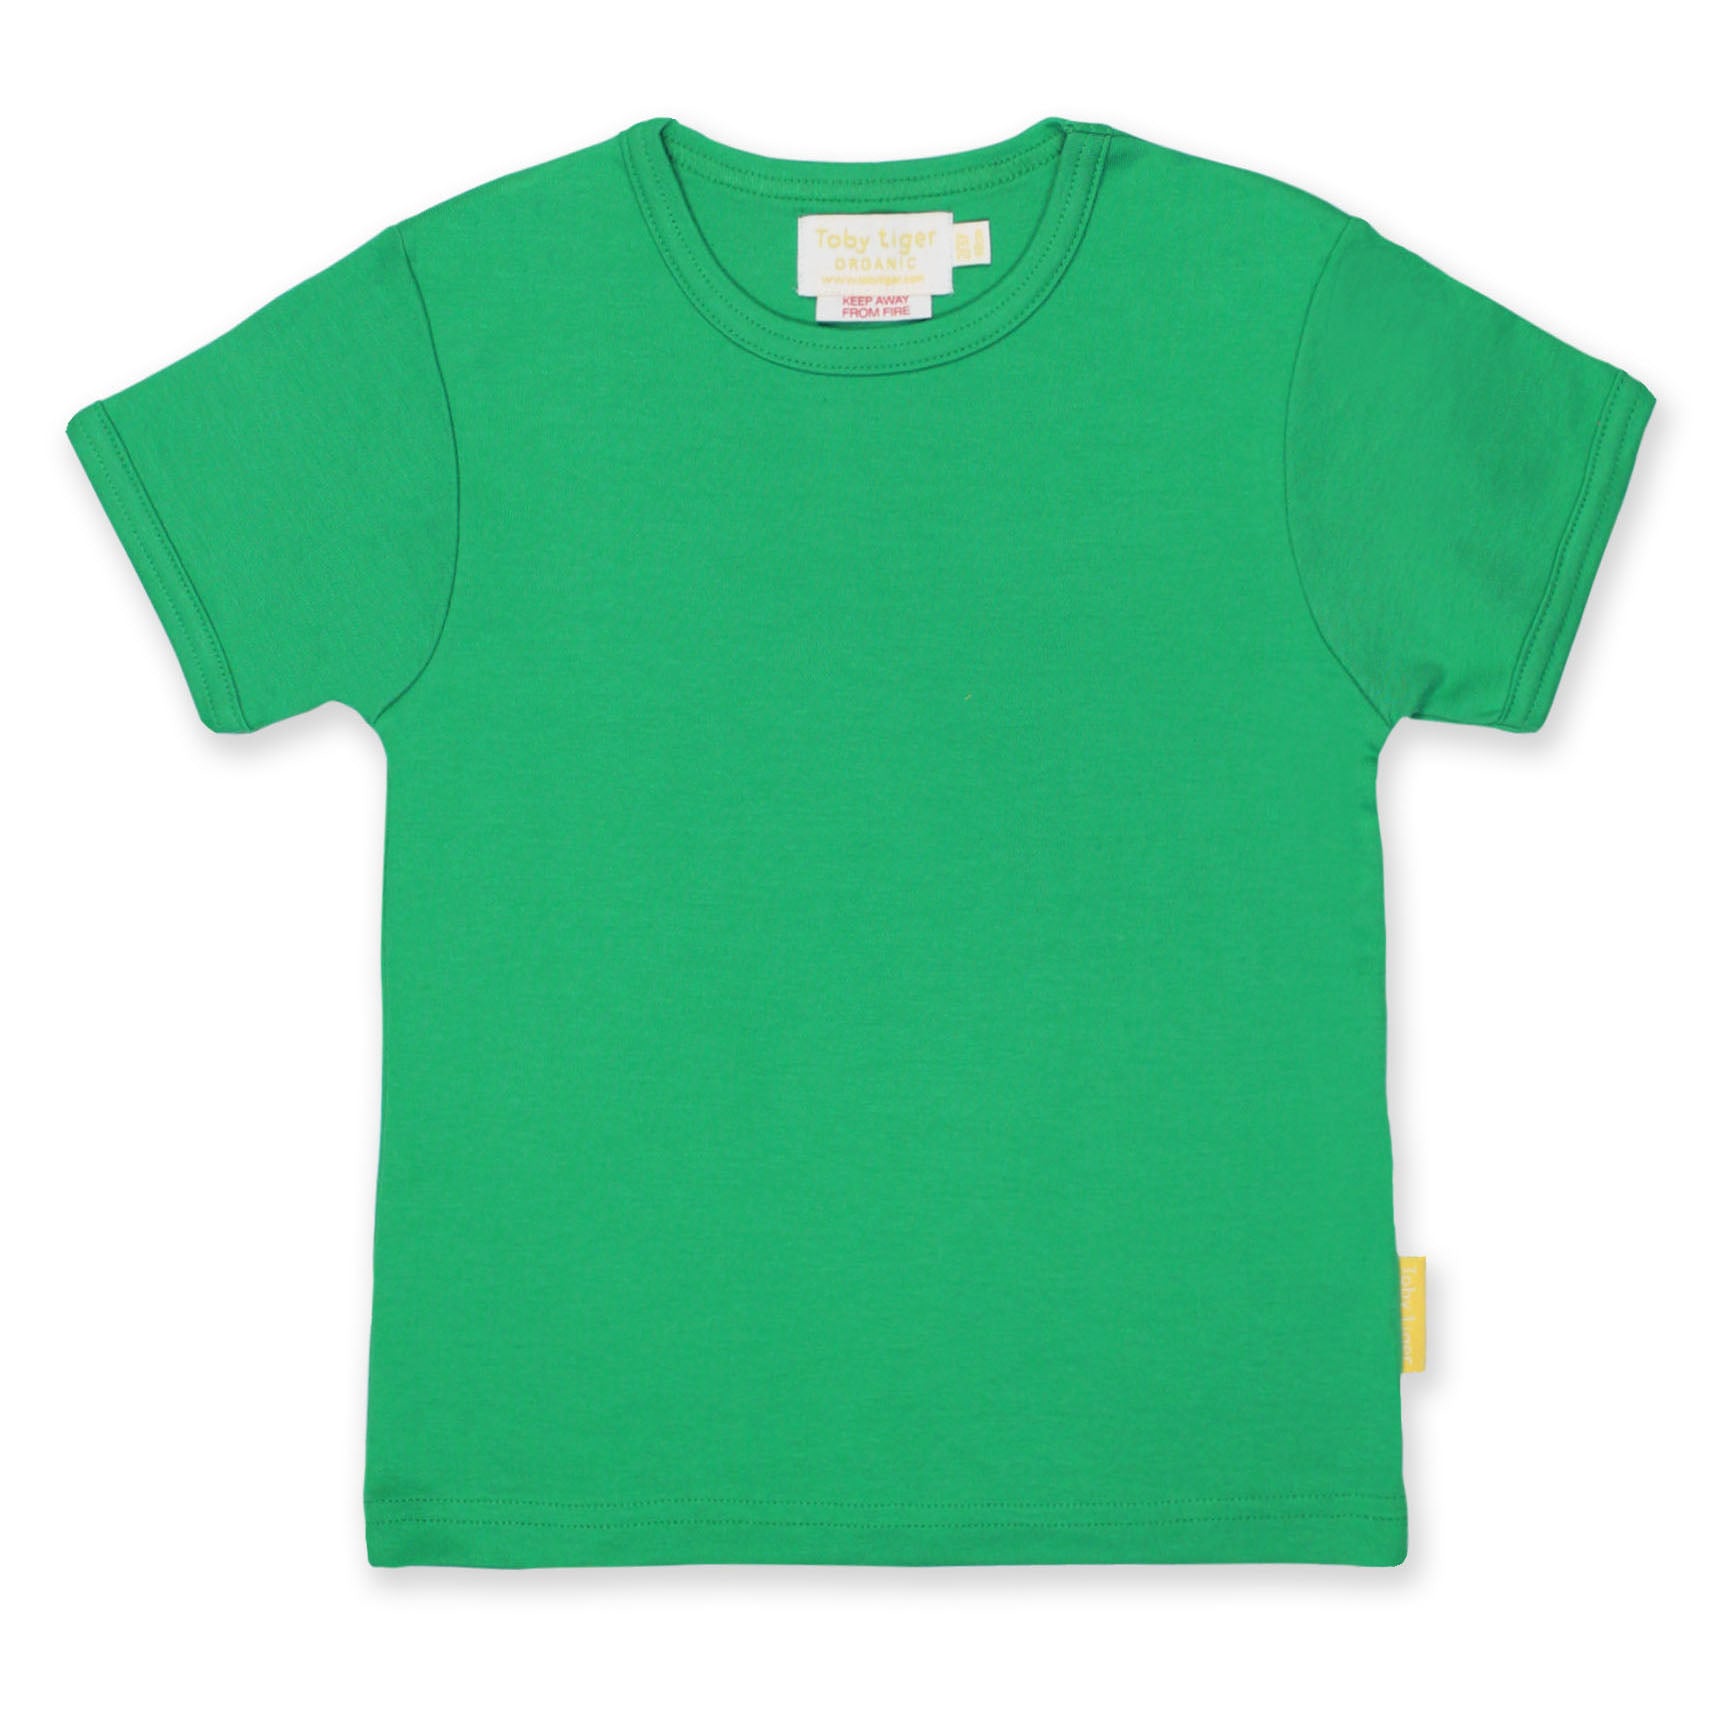 Toby Tiger basic green short sleeve t-shirt